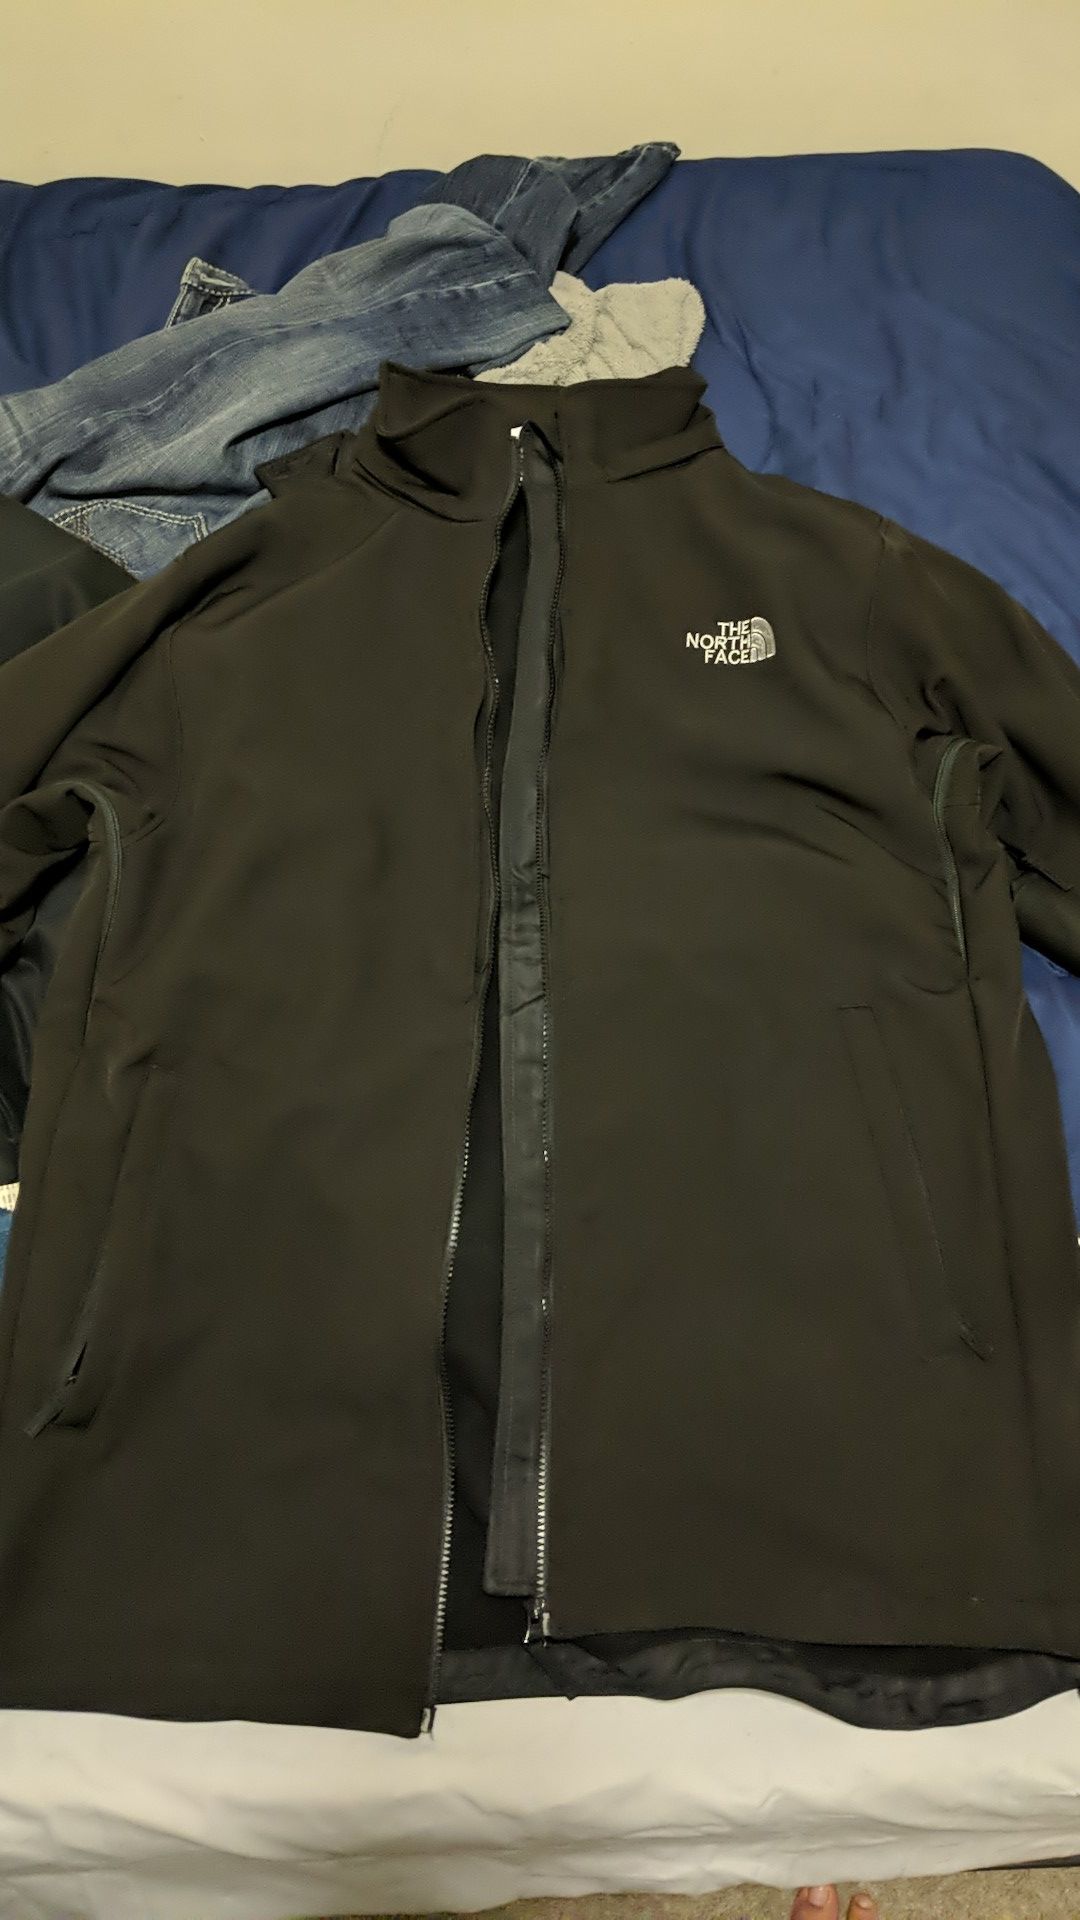 North face jacket (men's size L)